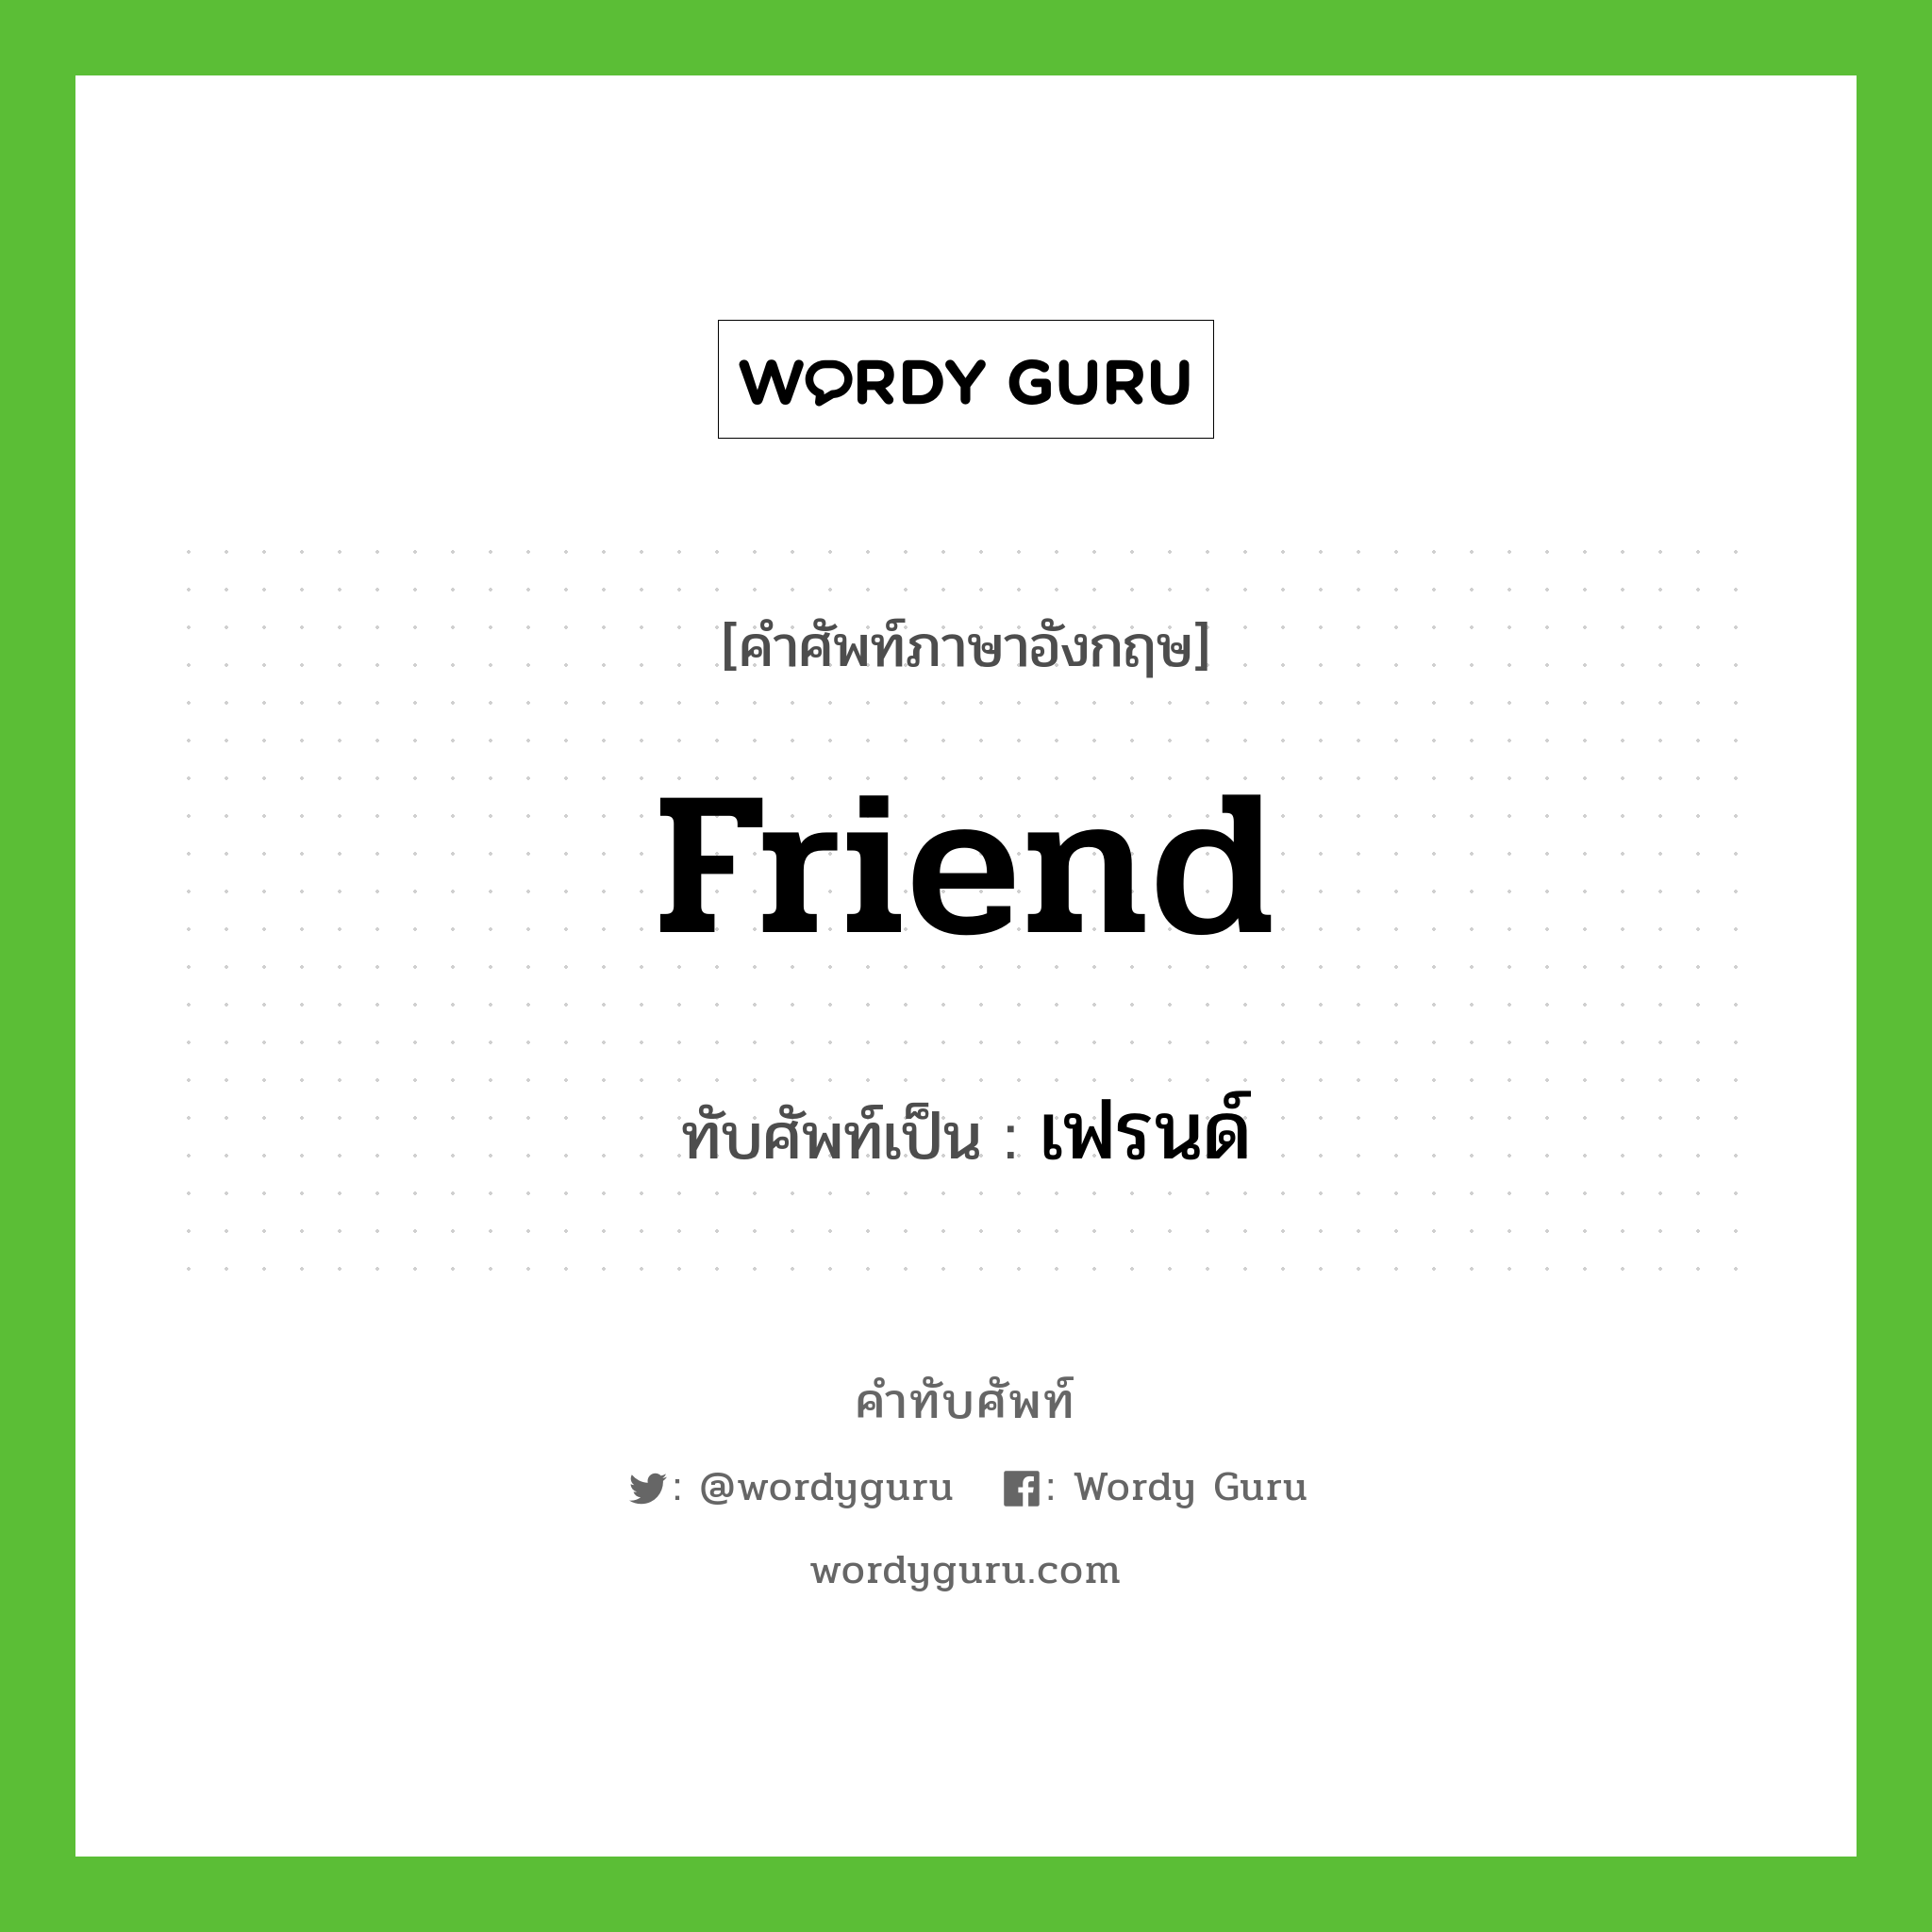 friend เขียนเป็นคำไทยว่าอะไร?, คำศัพท์ภาษาอังกฤษ friend ทับศัพท์เป็น เฟรนด์